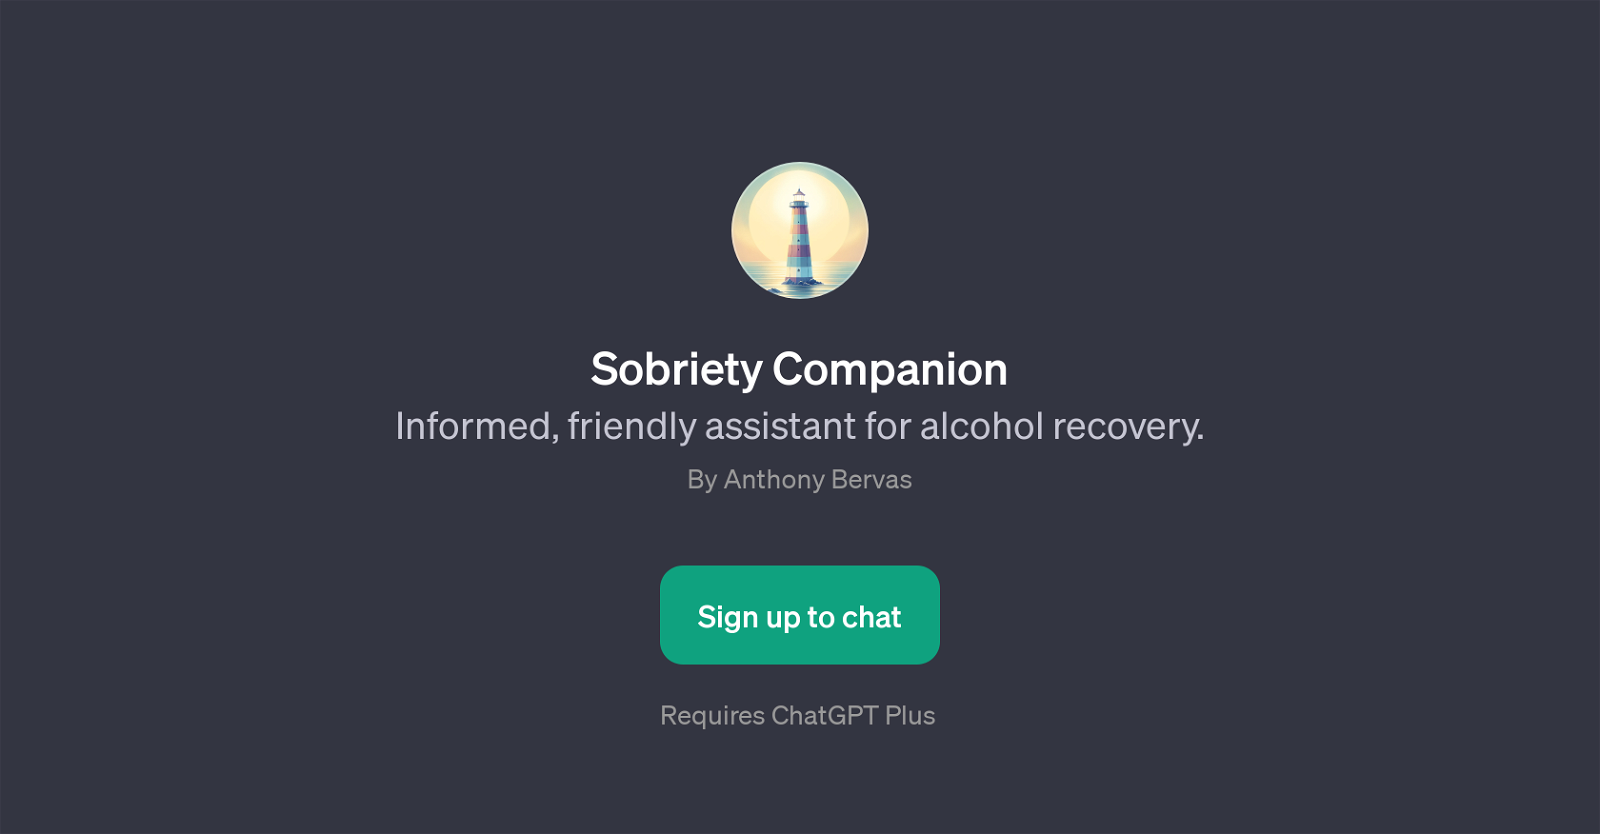 Sobriety Companion website